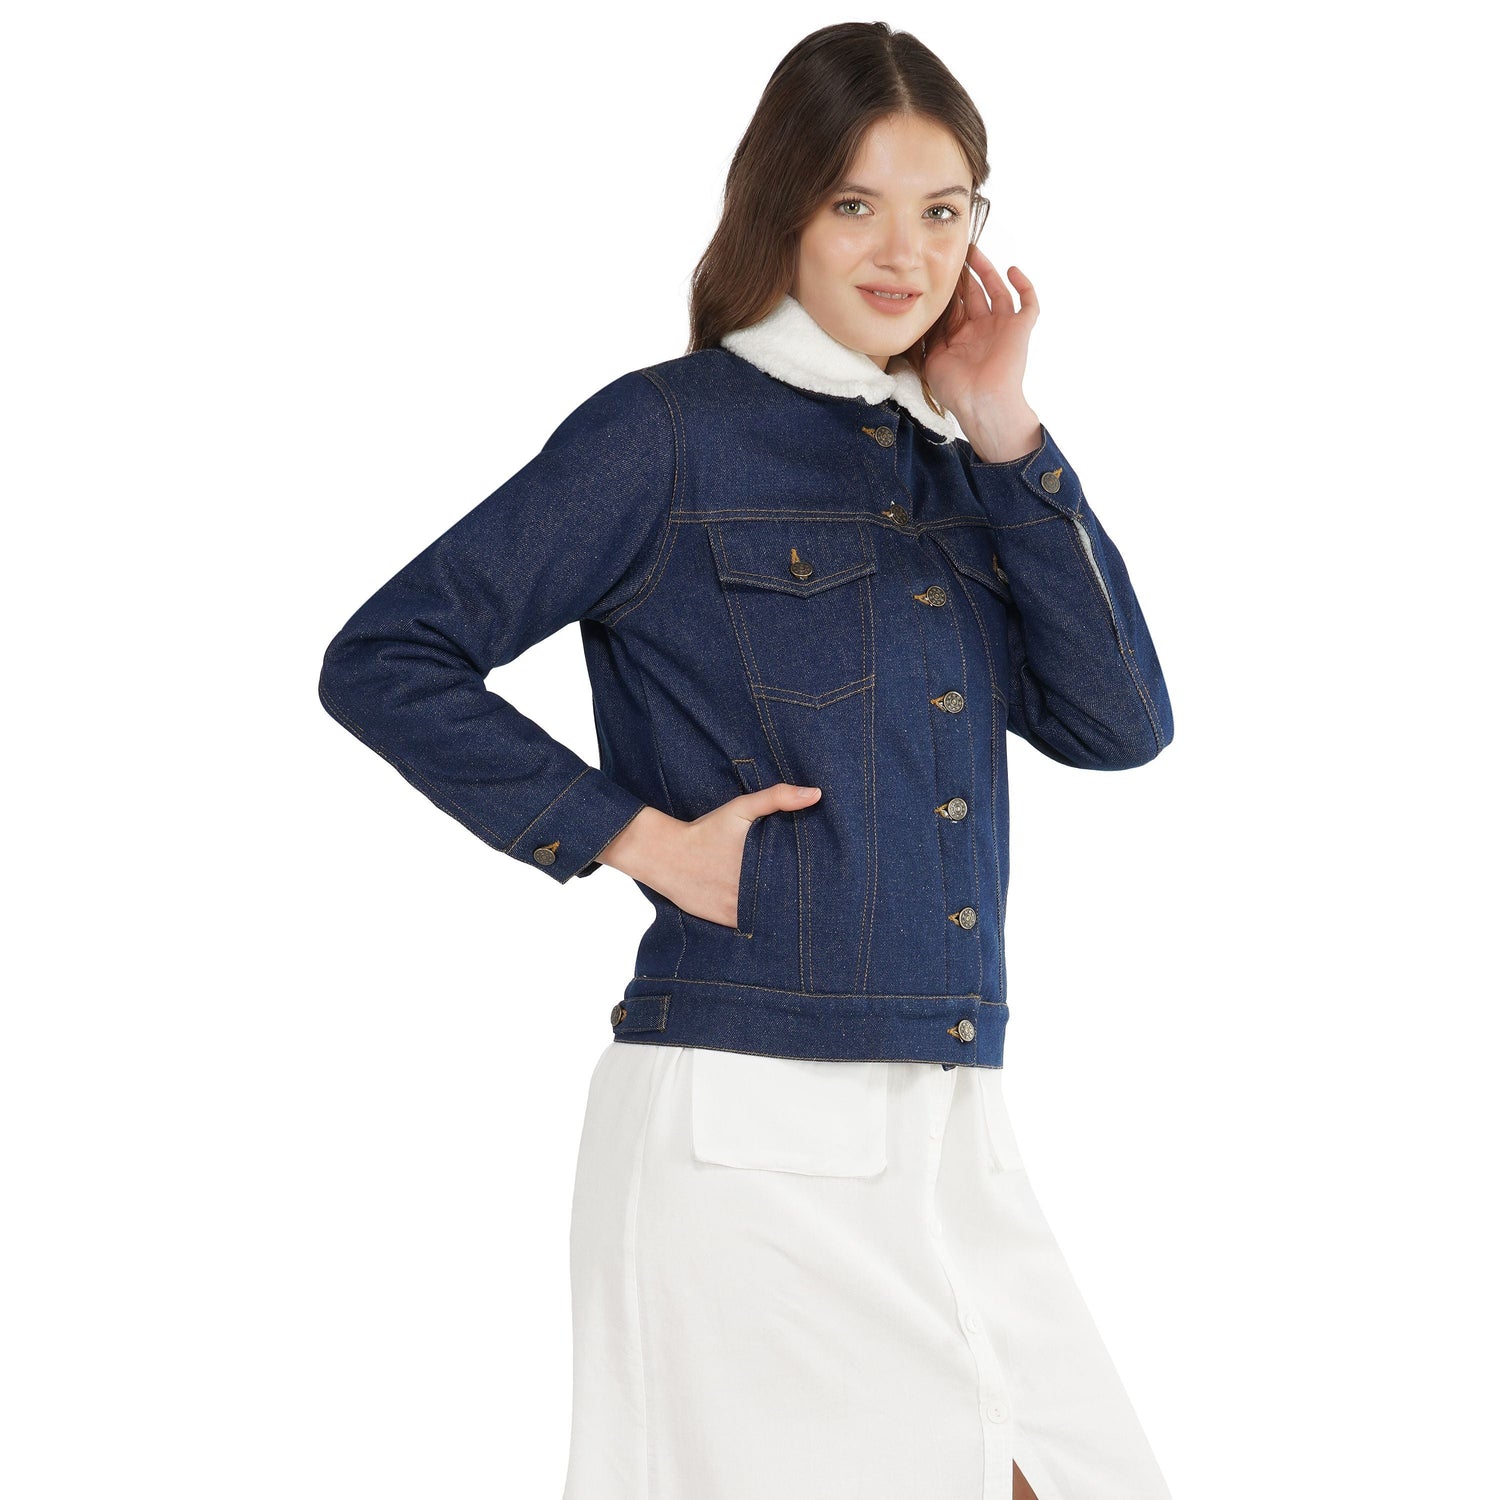 SLAY. Women's Denim Navy Blue Jacket with Faux-fur Lining-clothing-to-slay.myshopify.com-Denim Jacket